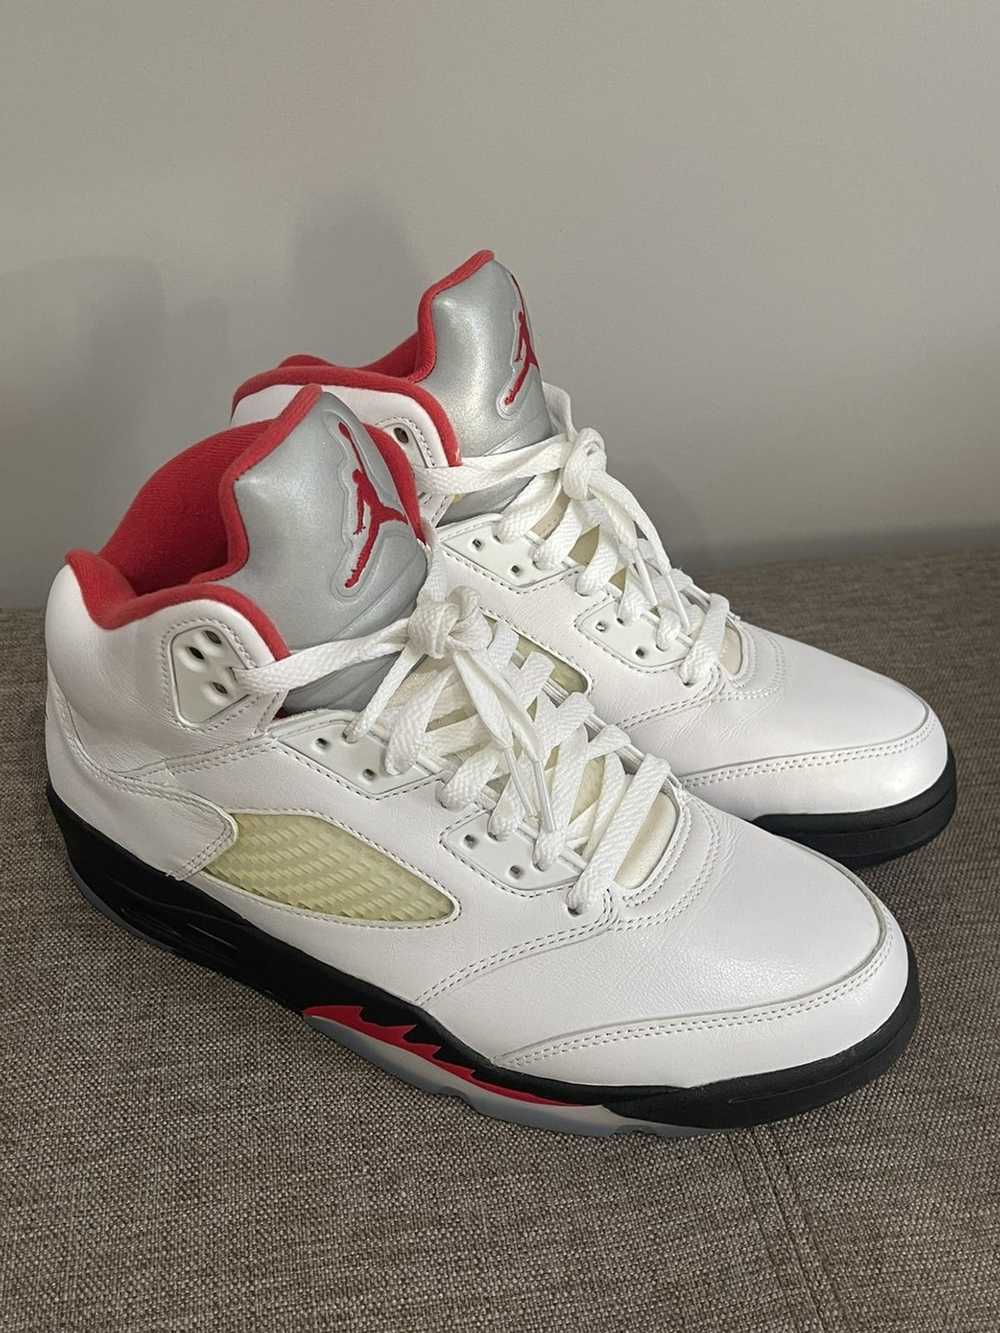 Jordan Brand × Nike Jordan 5 ‘Fire Red’ - image 2